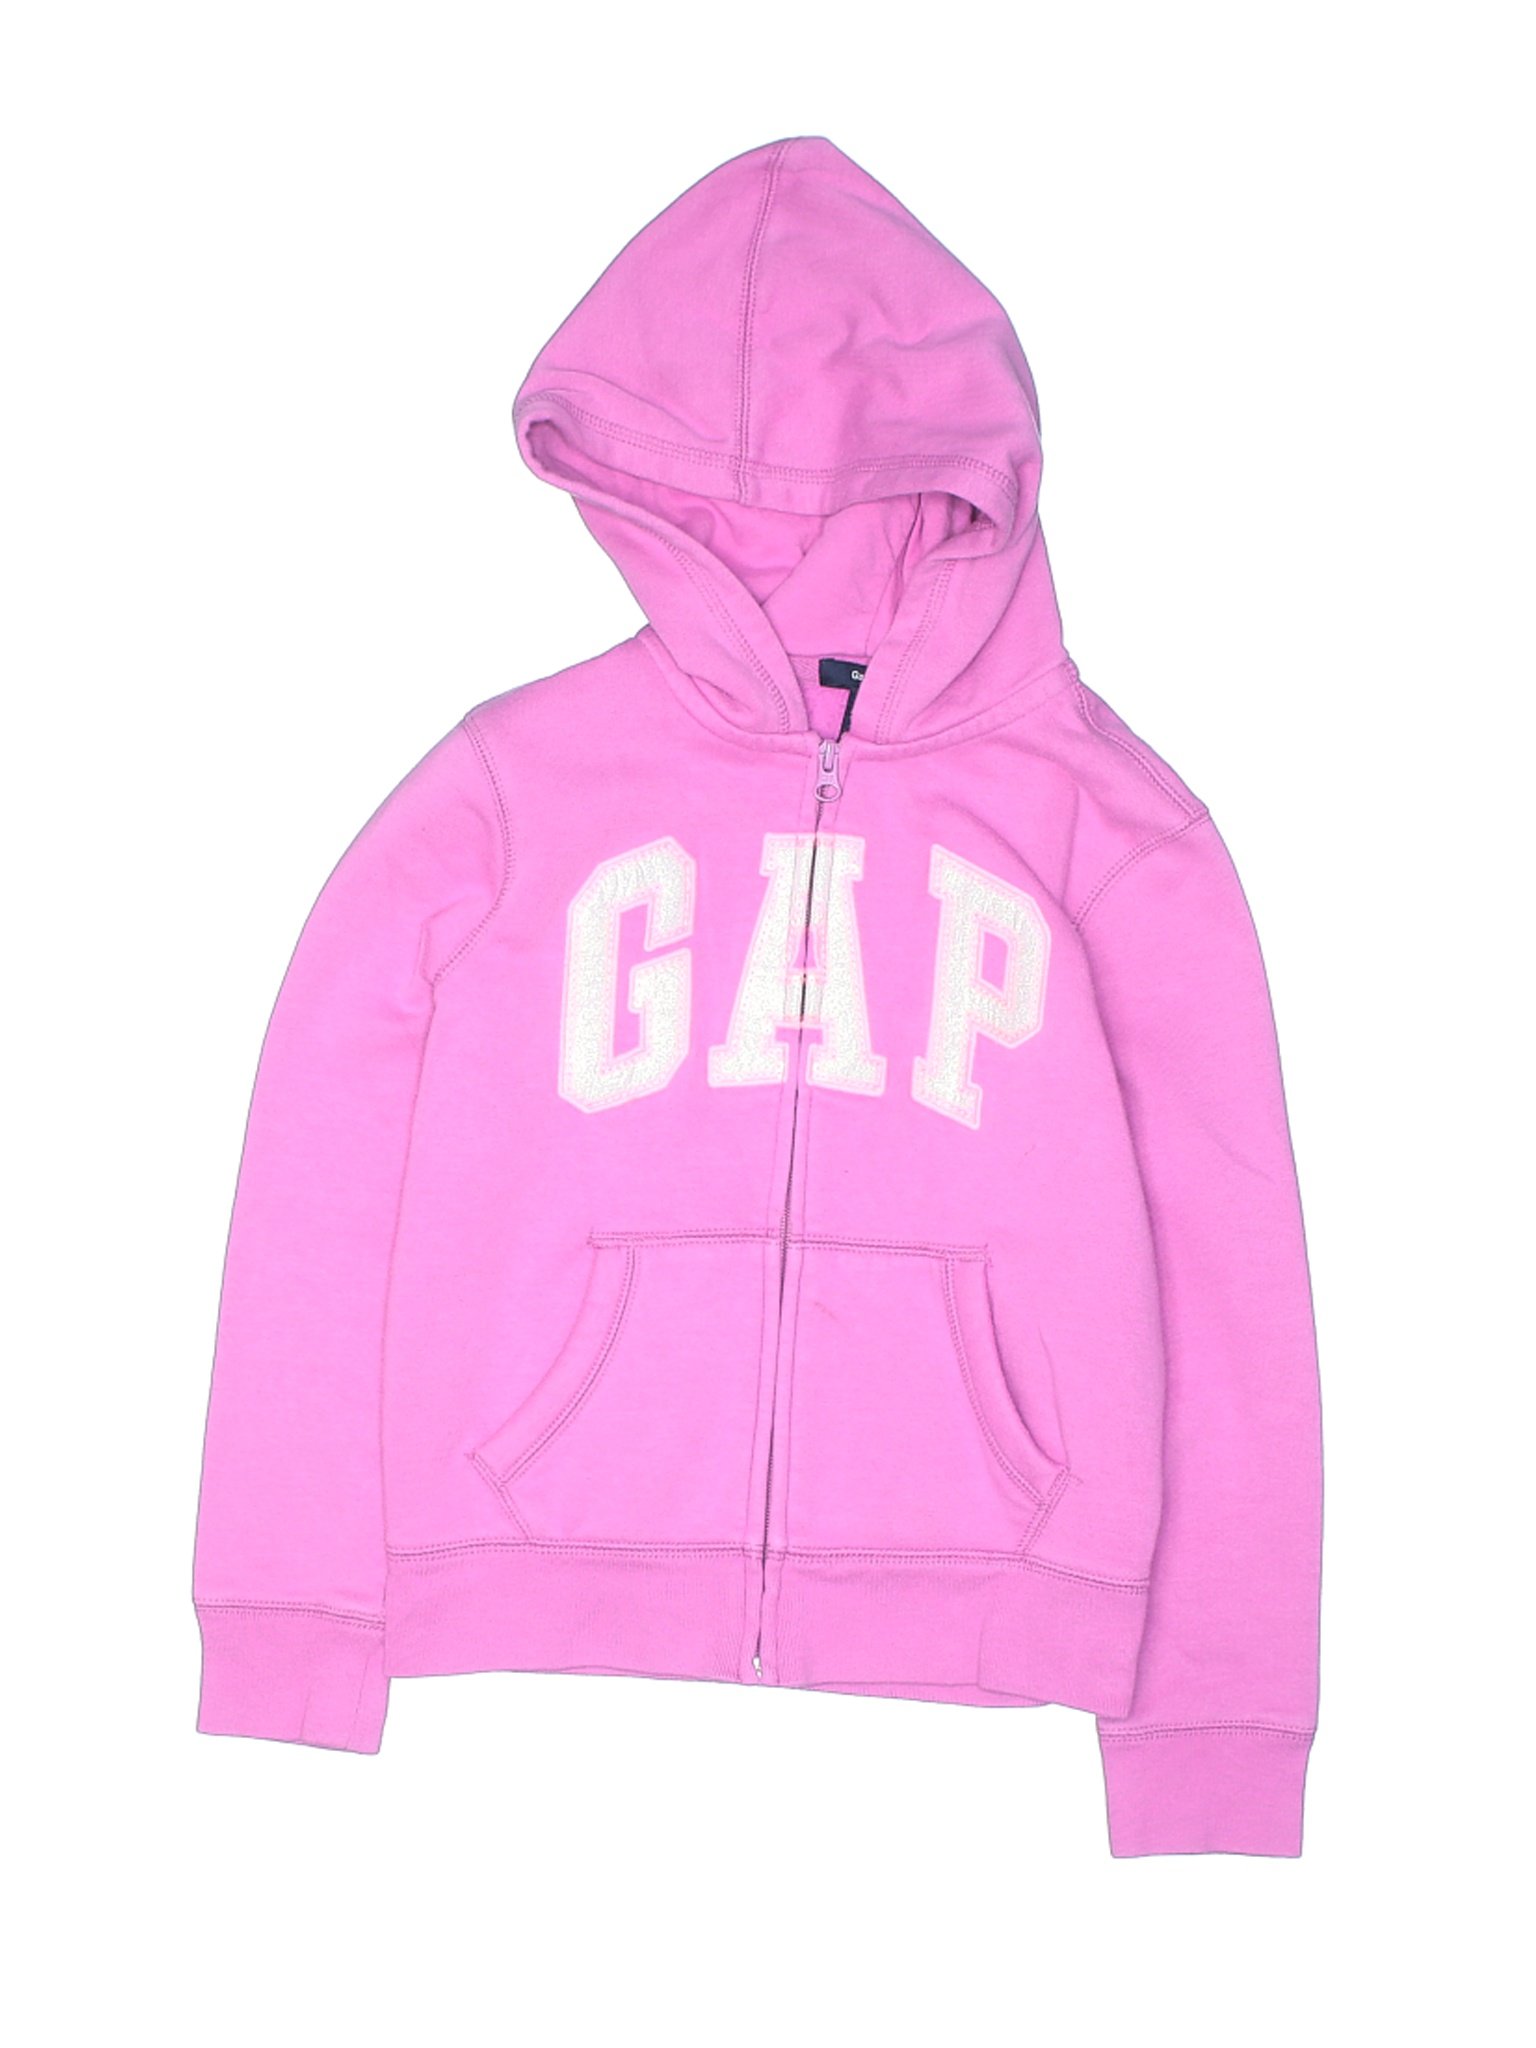 Gap Kids Girls Pink Zip Up Hoodie Medium kids | eBay